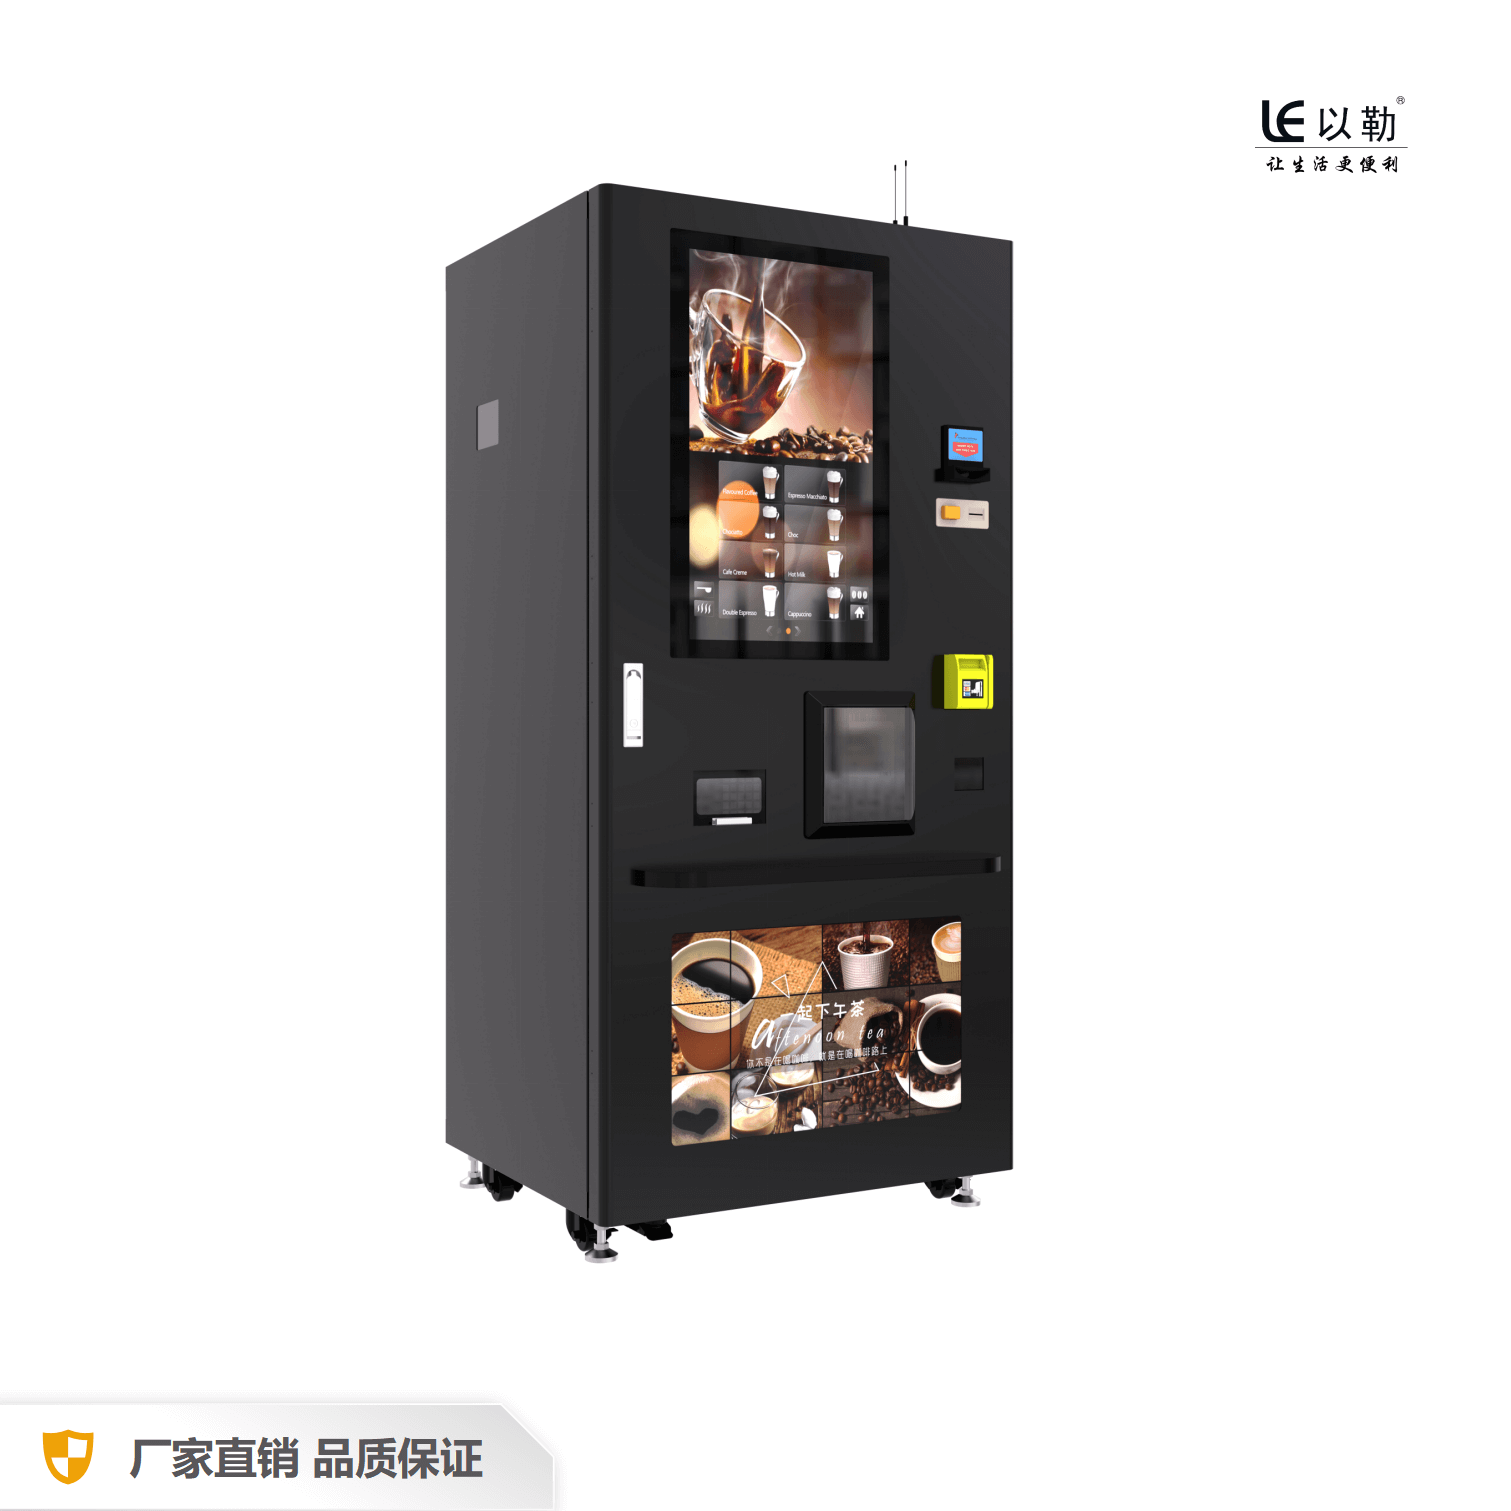 Commercial Auto Tea Coffee Vending Machine